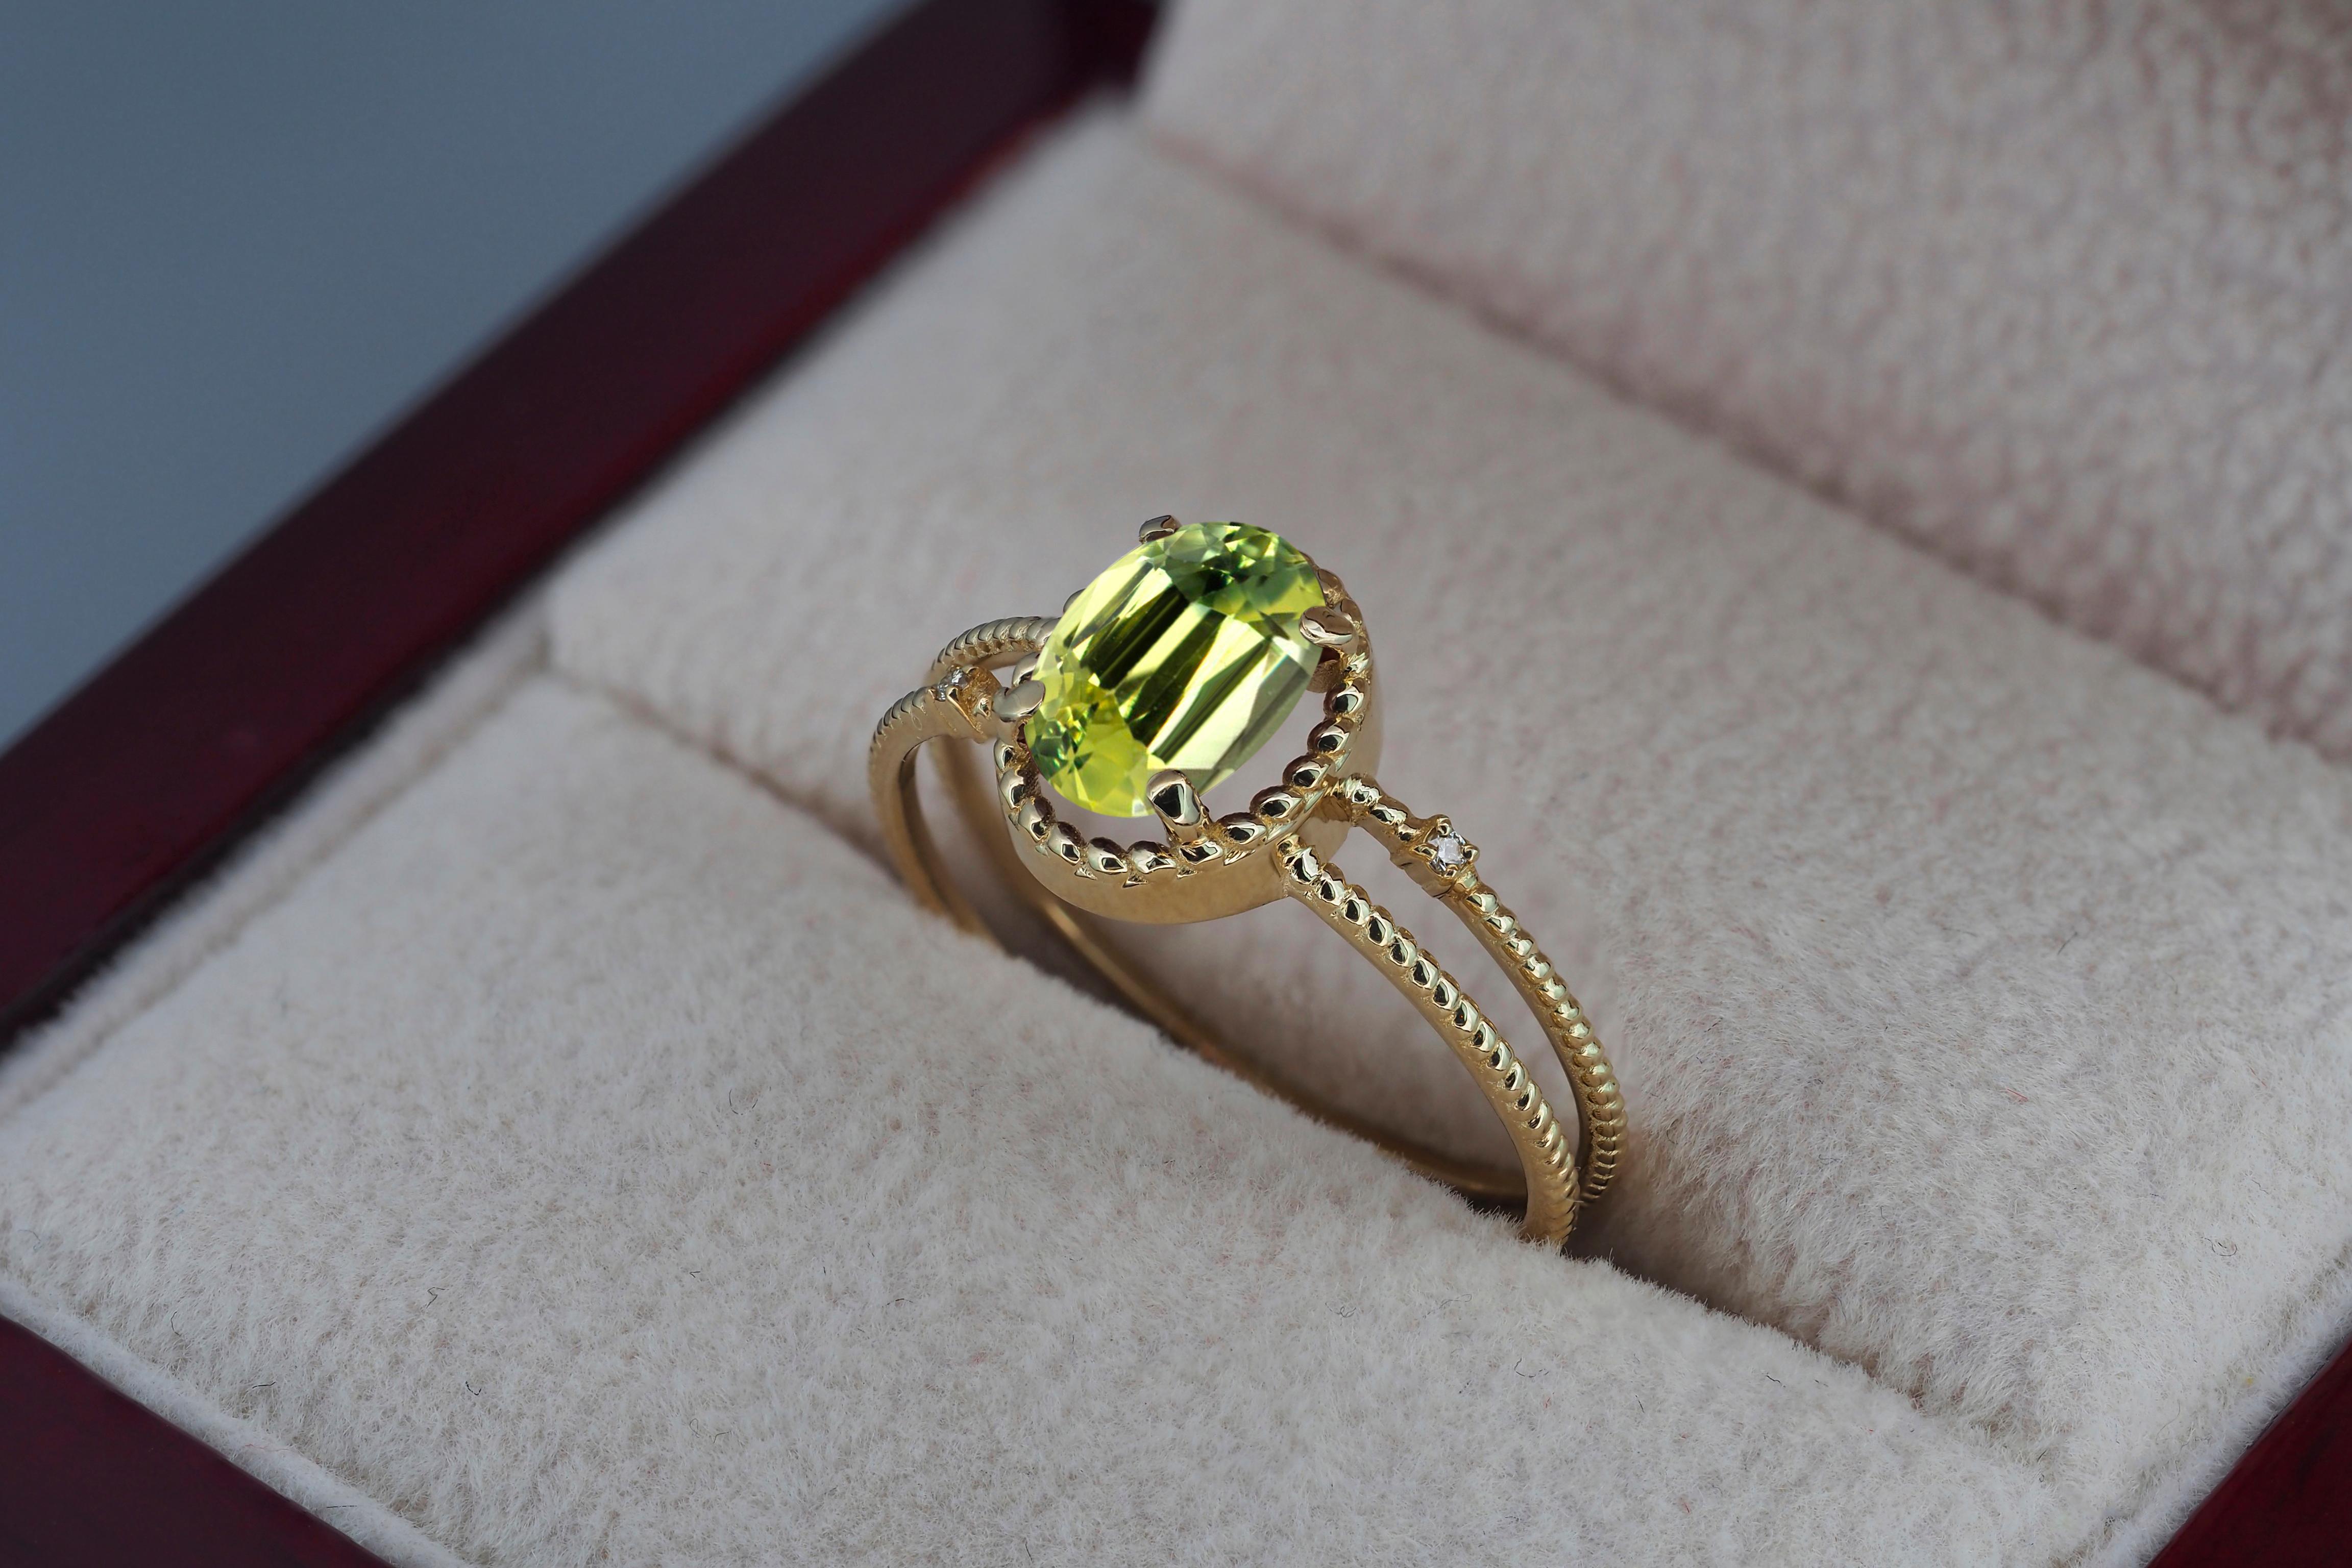 For Sale:  Oval Peridot Ring, 14k Gold Ring with Peridot, Minimalist Peridot Ring 5